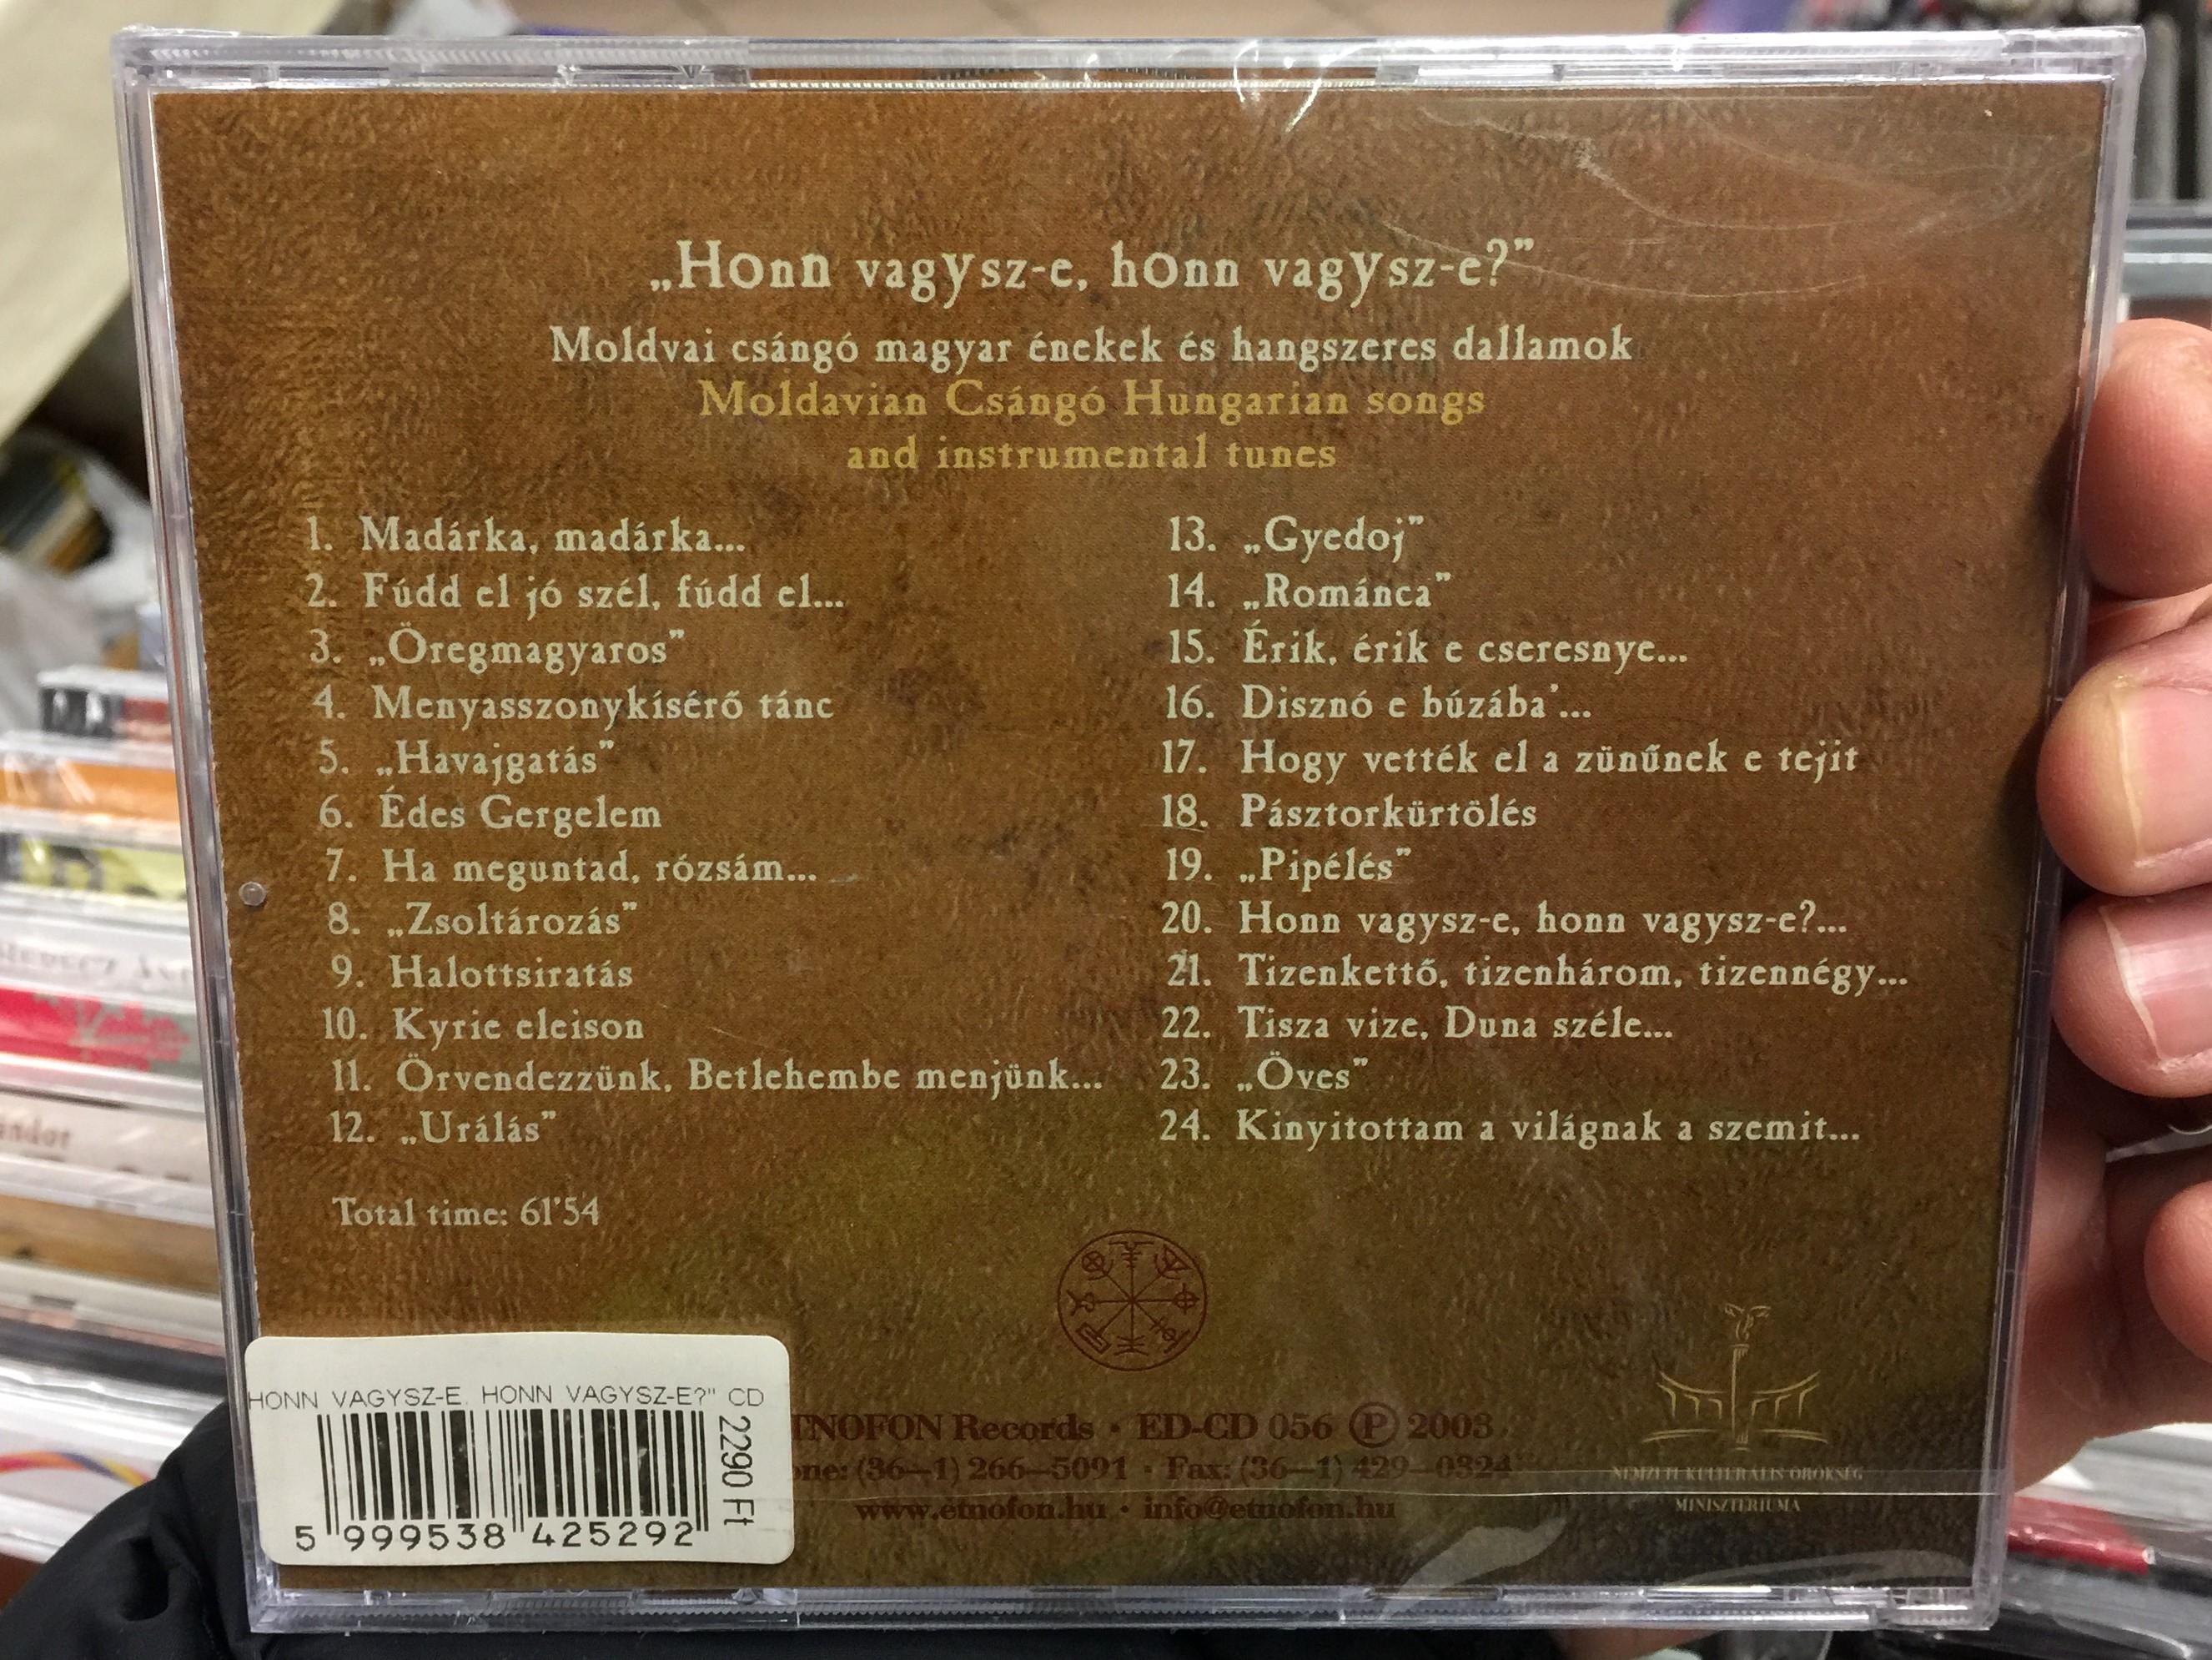 -honn-vagysz-e-honn-vagysz-e-are-you-at-home-are-you-at-home-moldvai-cs-ng-magyar-nekek-s-hangszeres-dallamok-moldavian-csango-hungarian-songs-and-instrumental-tunes-etnofon-a.jpg